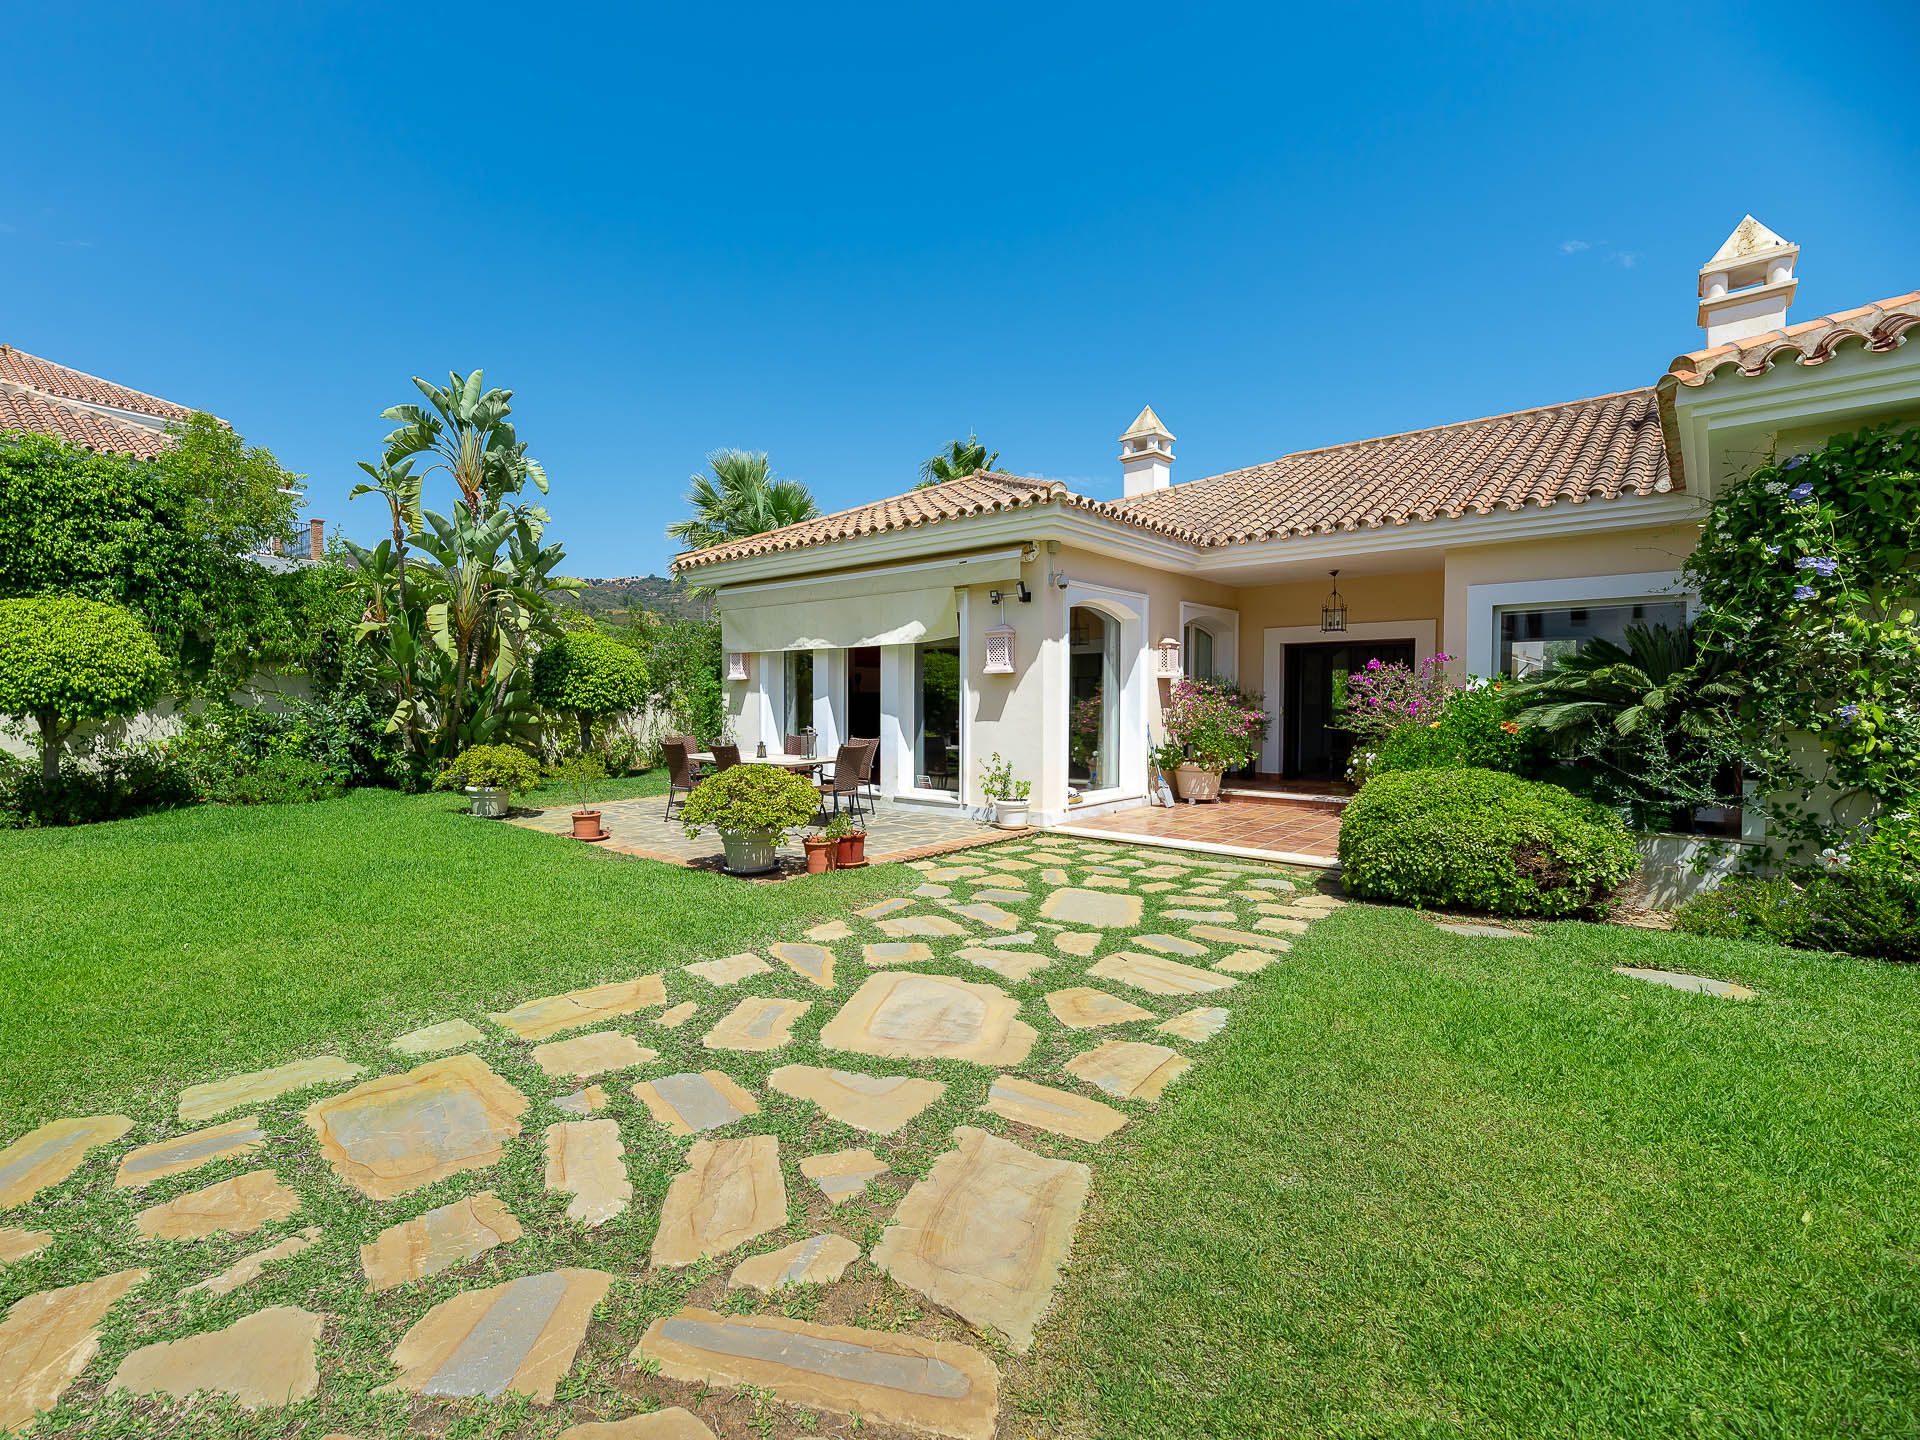 Charming Mediterranean style villa with sea views | Engel & Völkers Marbella